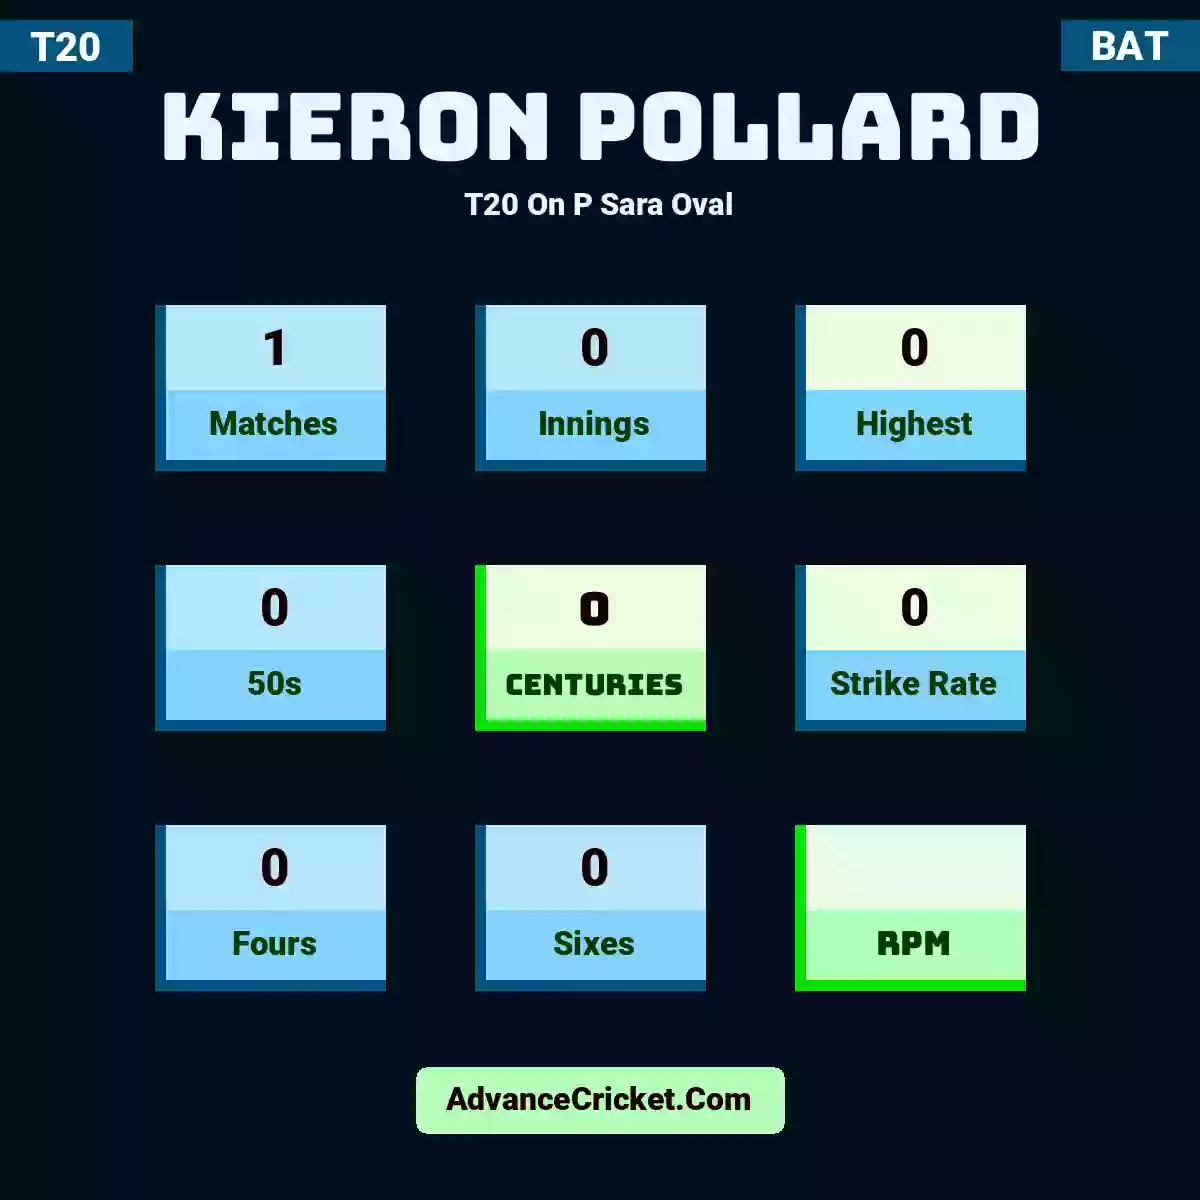 Kieron Pollard T20  On P Sara Oval, Kieron Pollard played 1 matches, scored 0 runs as highest, 0 half-centuries, and 0 centuries, with a strike rate of 0. K.Pollard hit 0 fours and 0 sixes.